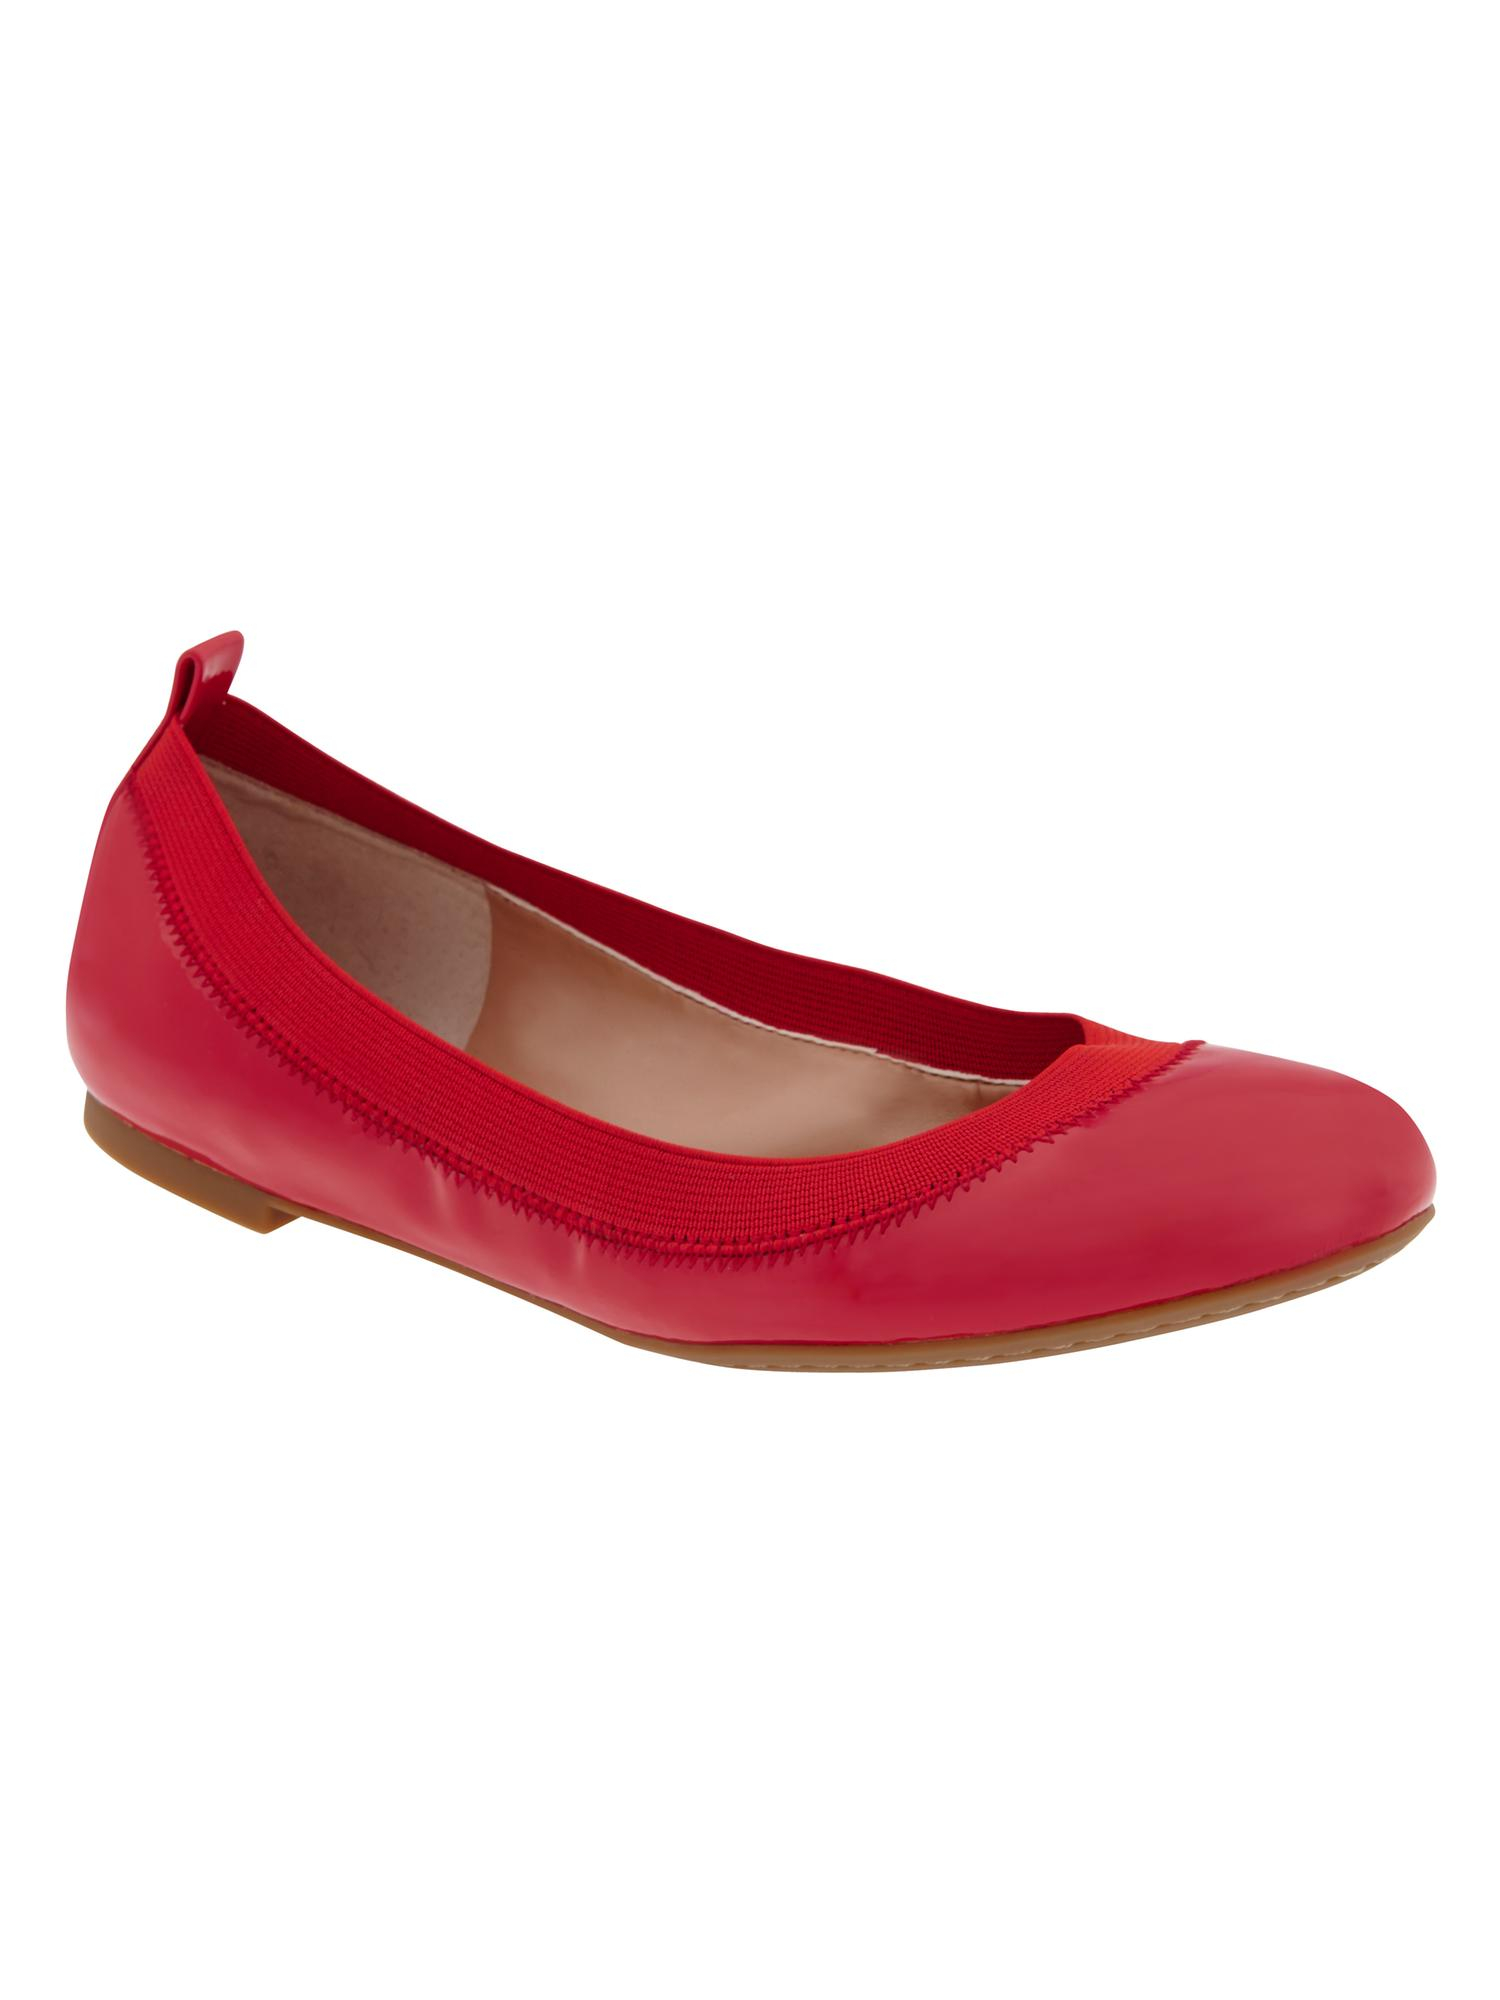 Banana Republic Abby Ballet Flat in Red (Lipstick) | Lyst